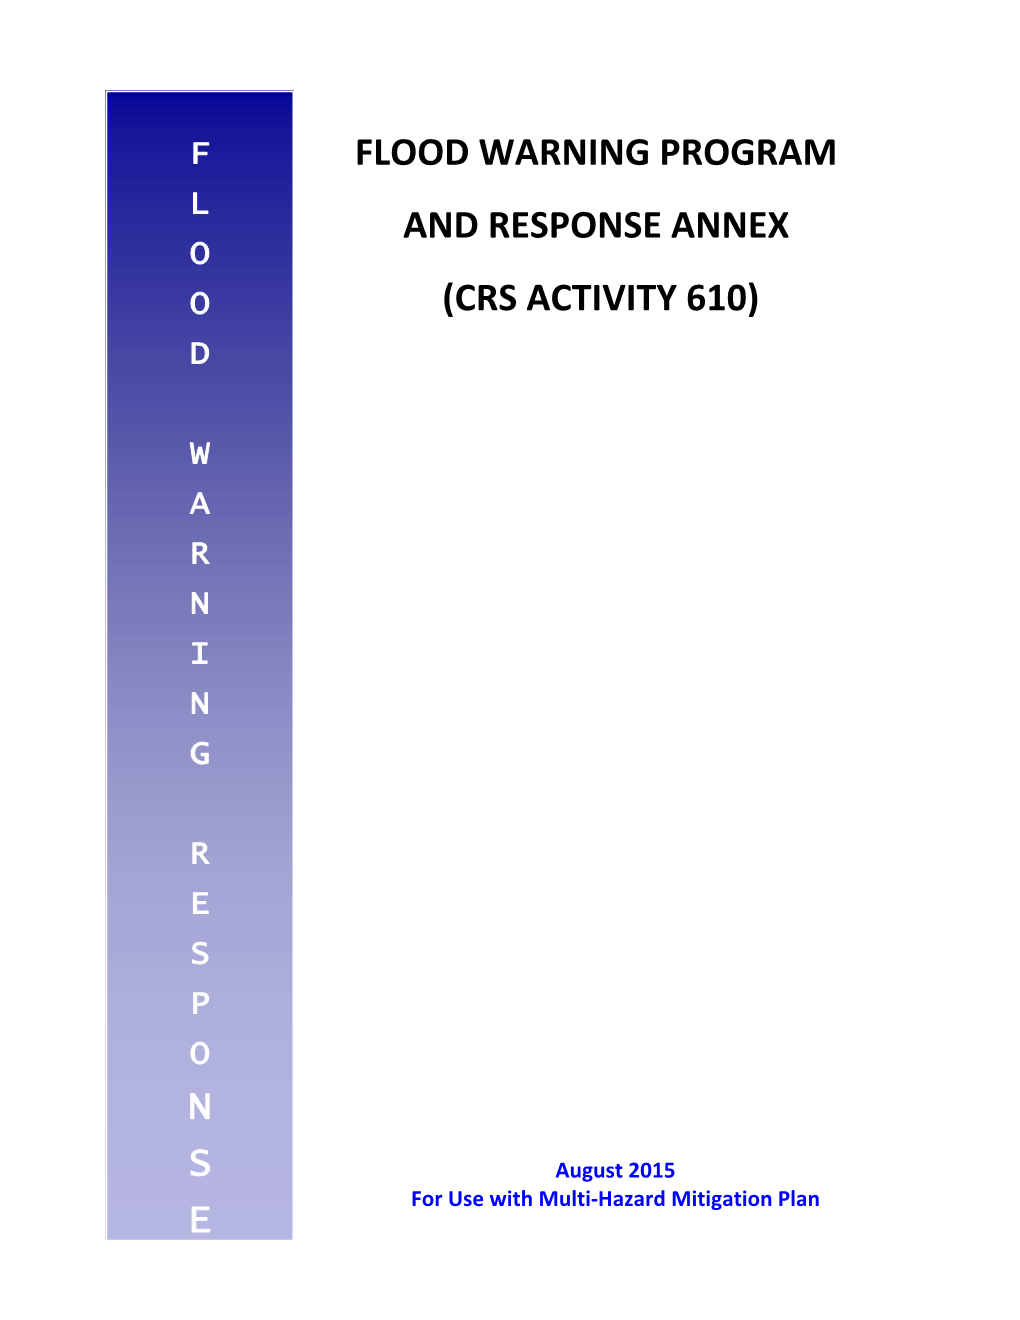 Flood Warning Program and Response Annex (Crs Activity 610)